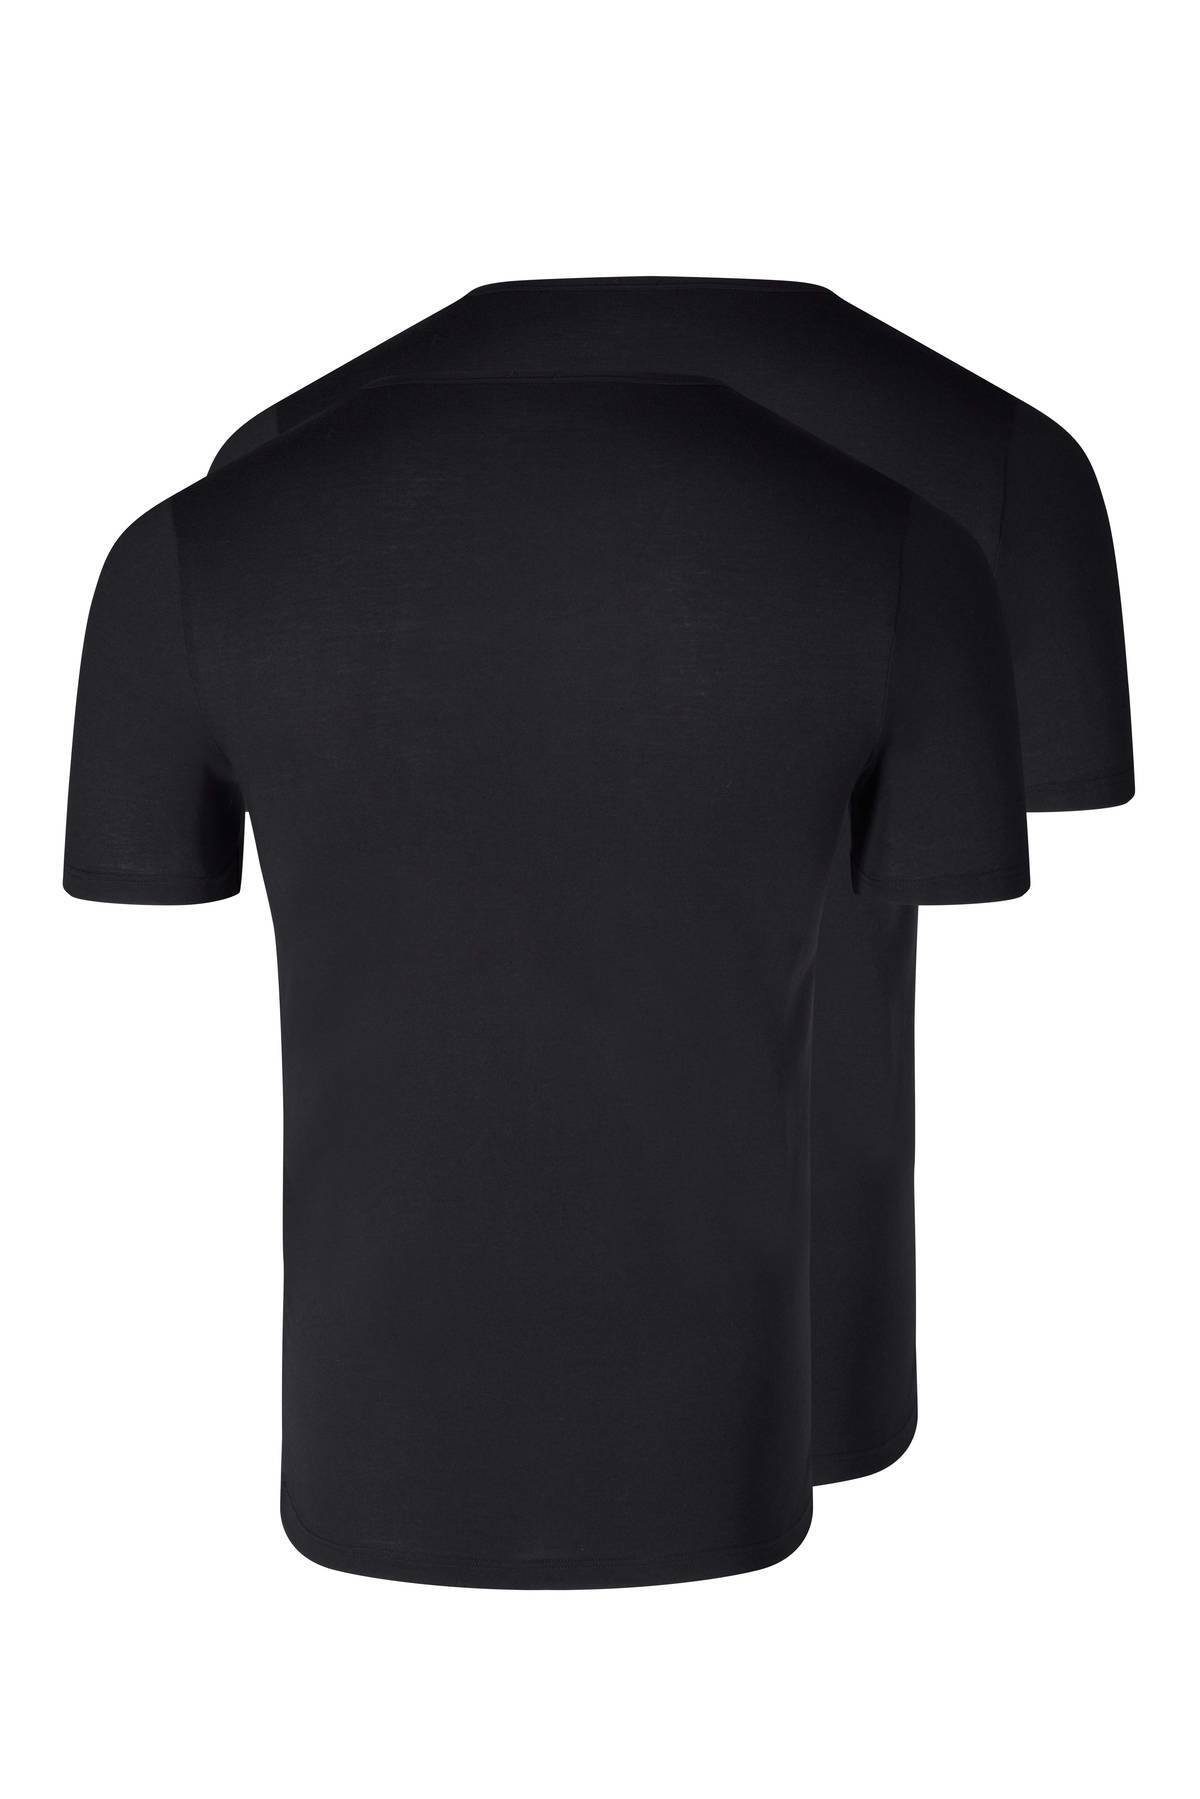 Schwarz Unterhemd 2er Skiny Herren Pack Unterhemd, - Halbarm T-Shirt,